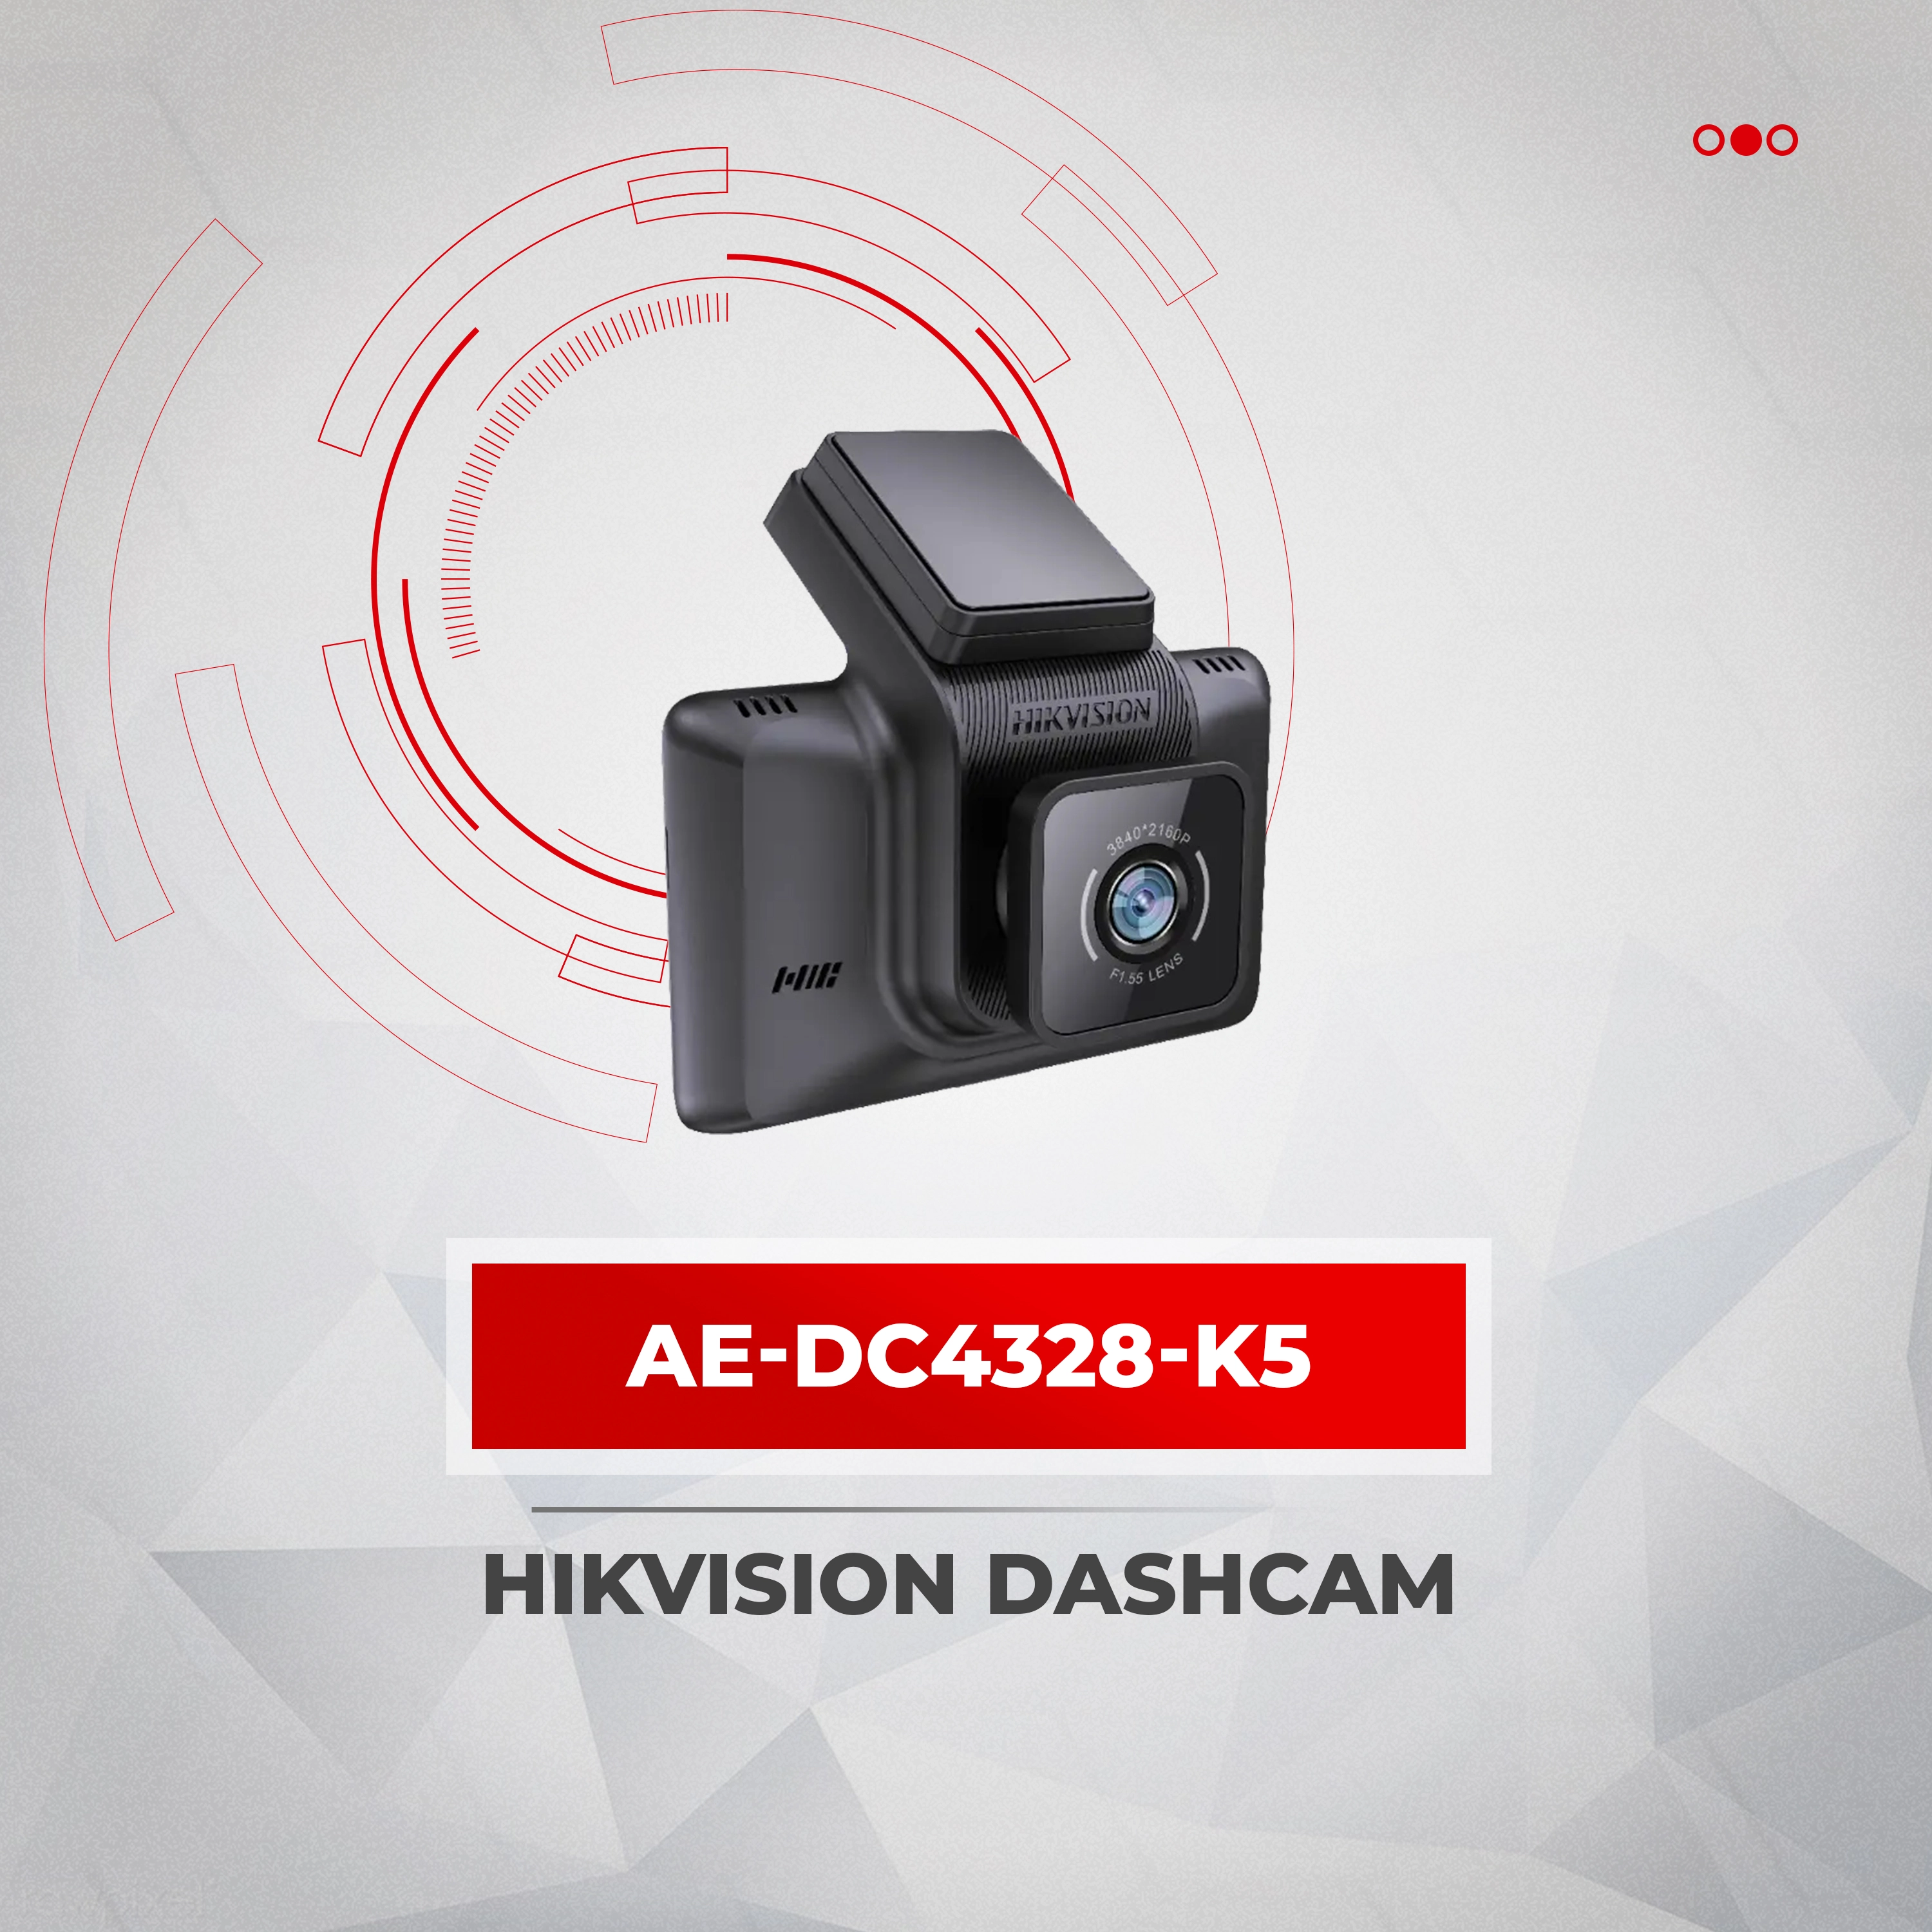 Hikvision 2ch dashcam wifi cctv security surveillance camera 